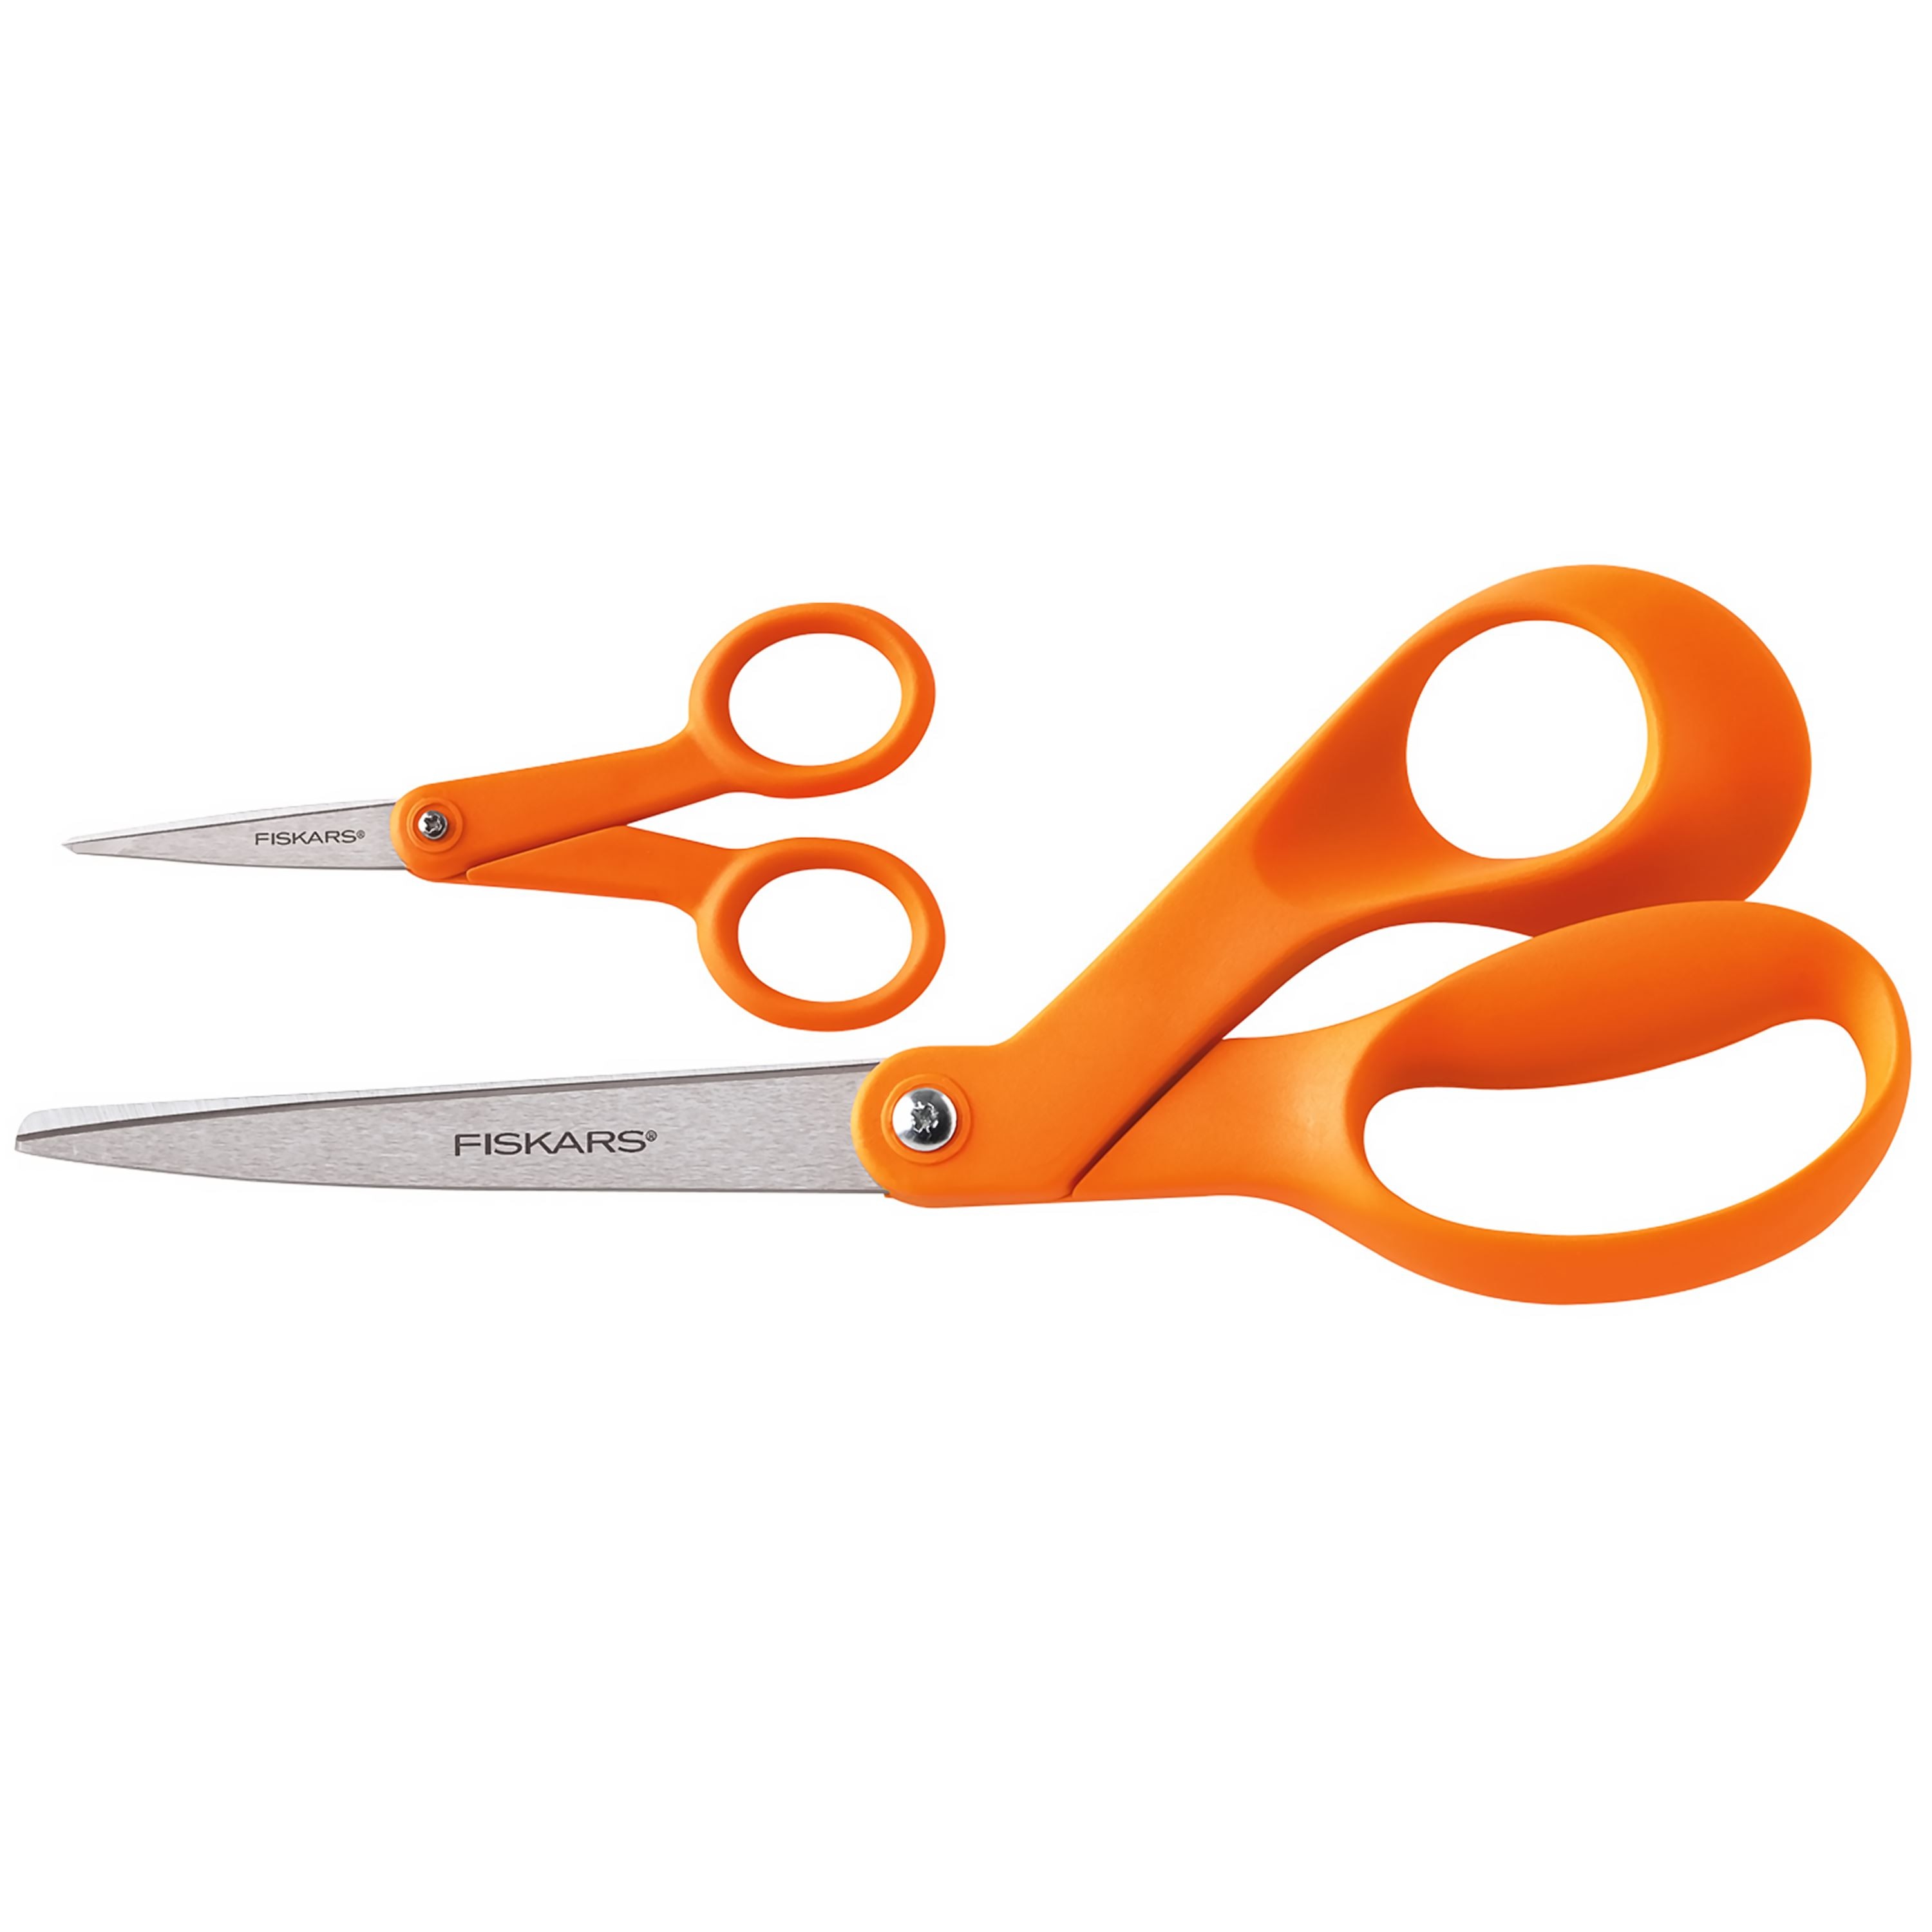 Ronshin Mini Fishing Scissors Stainless Steel Fishing Line Cutter Serrated Scissors, Orange